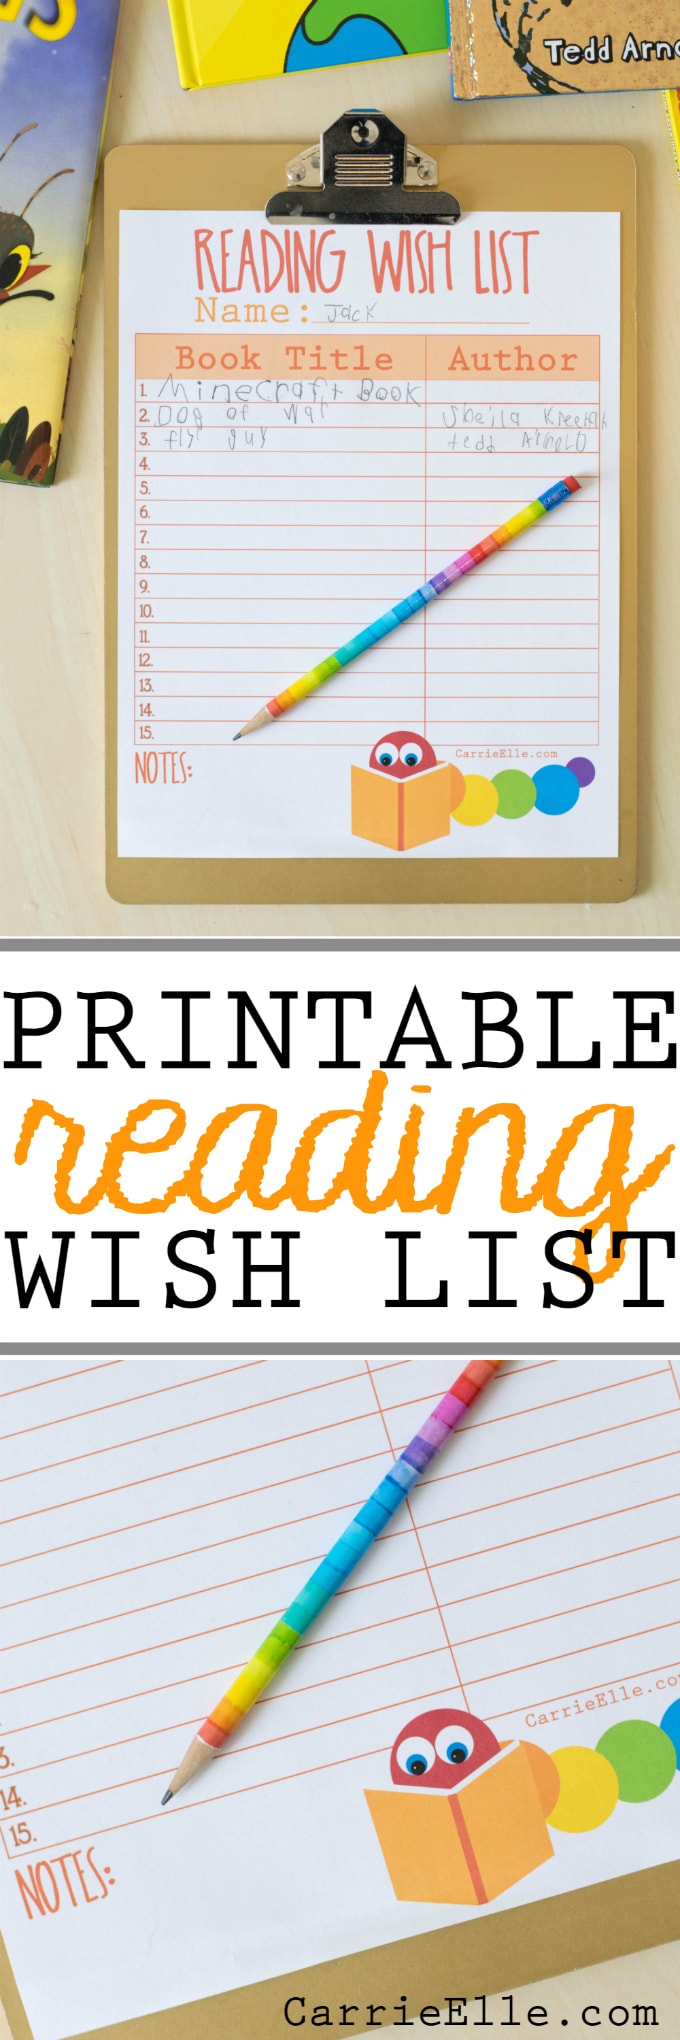 Printable Reading Wish List for Kids